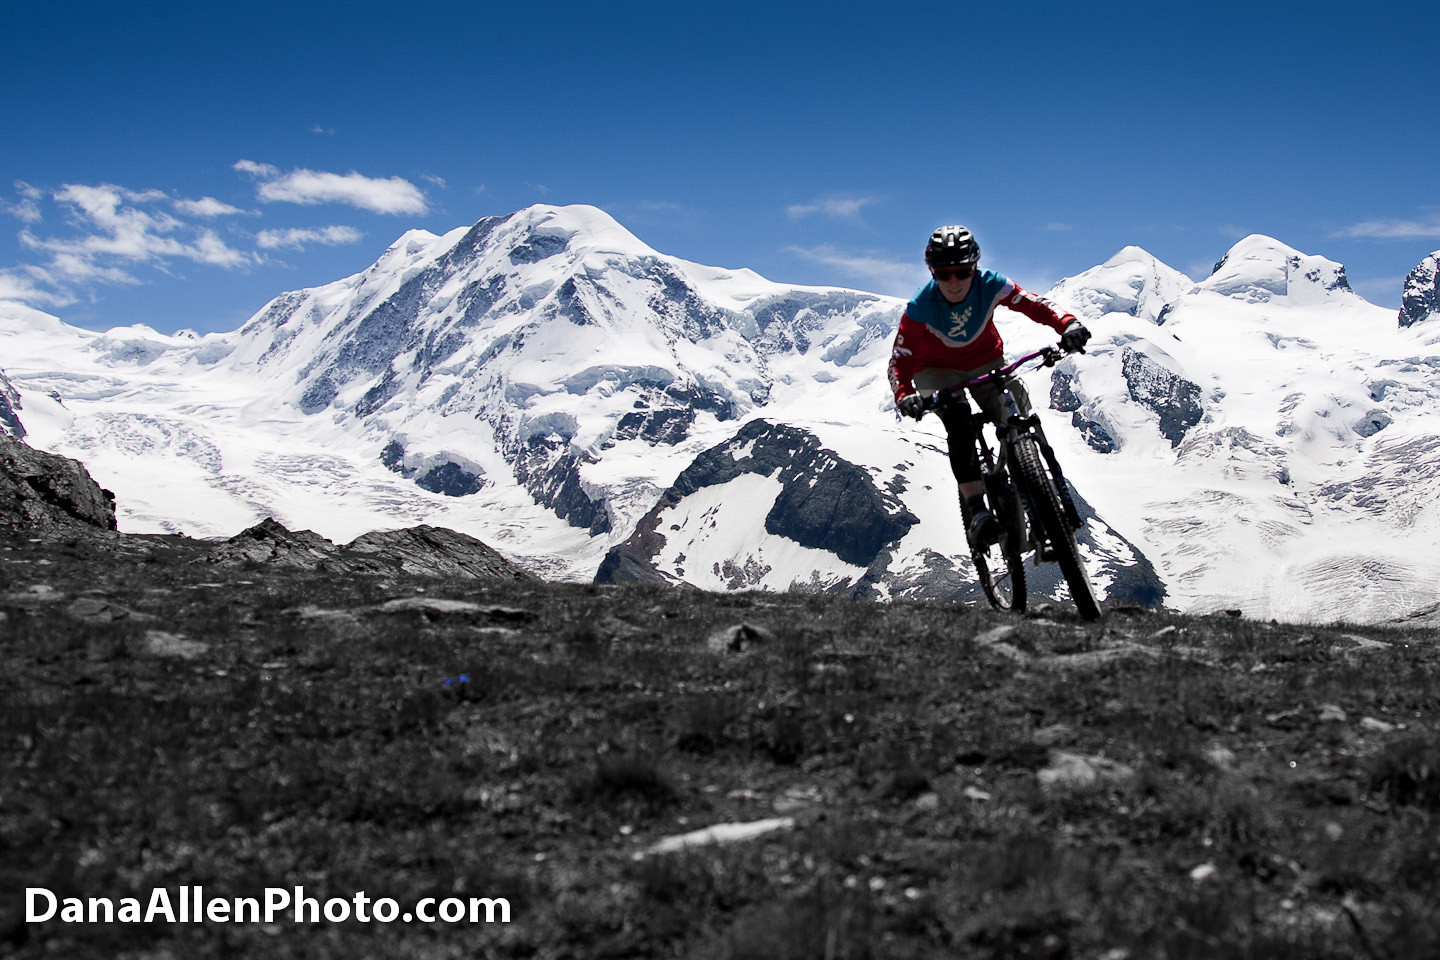  Alps 17   danaallenphotocom   Mountain Biking Pictures   Vital MTB